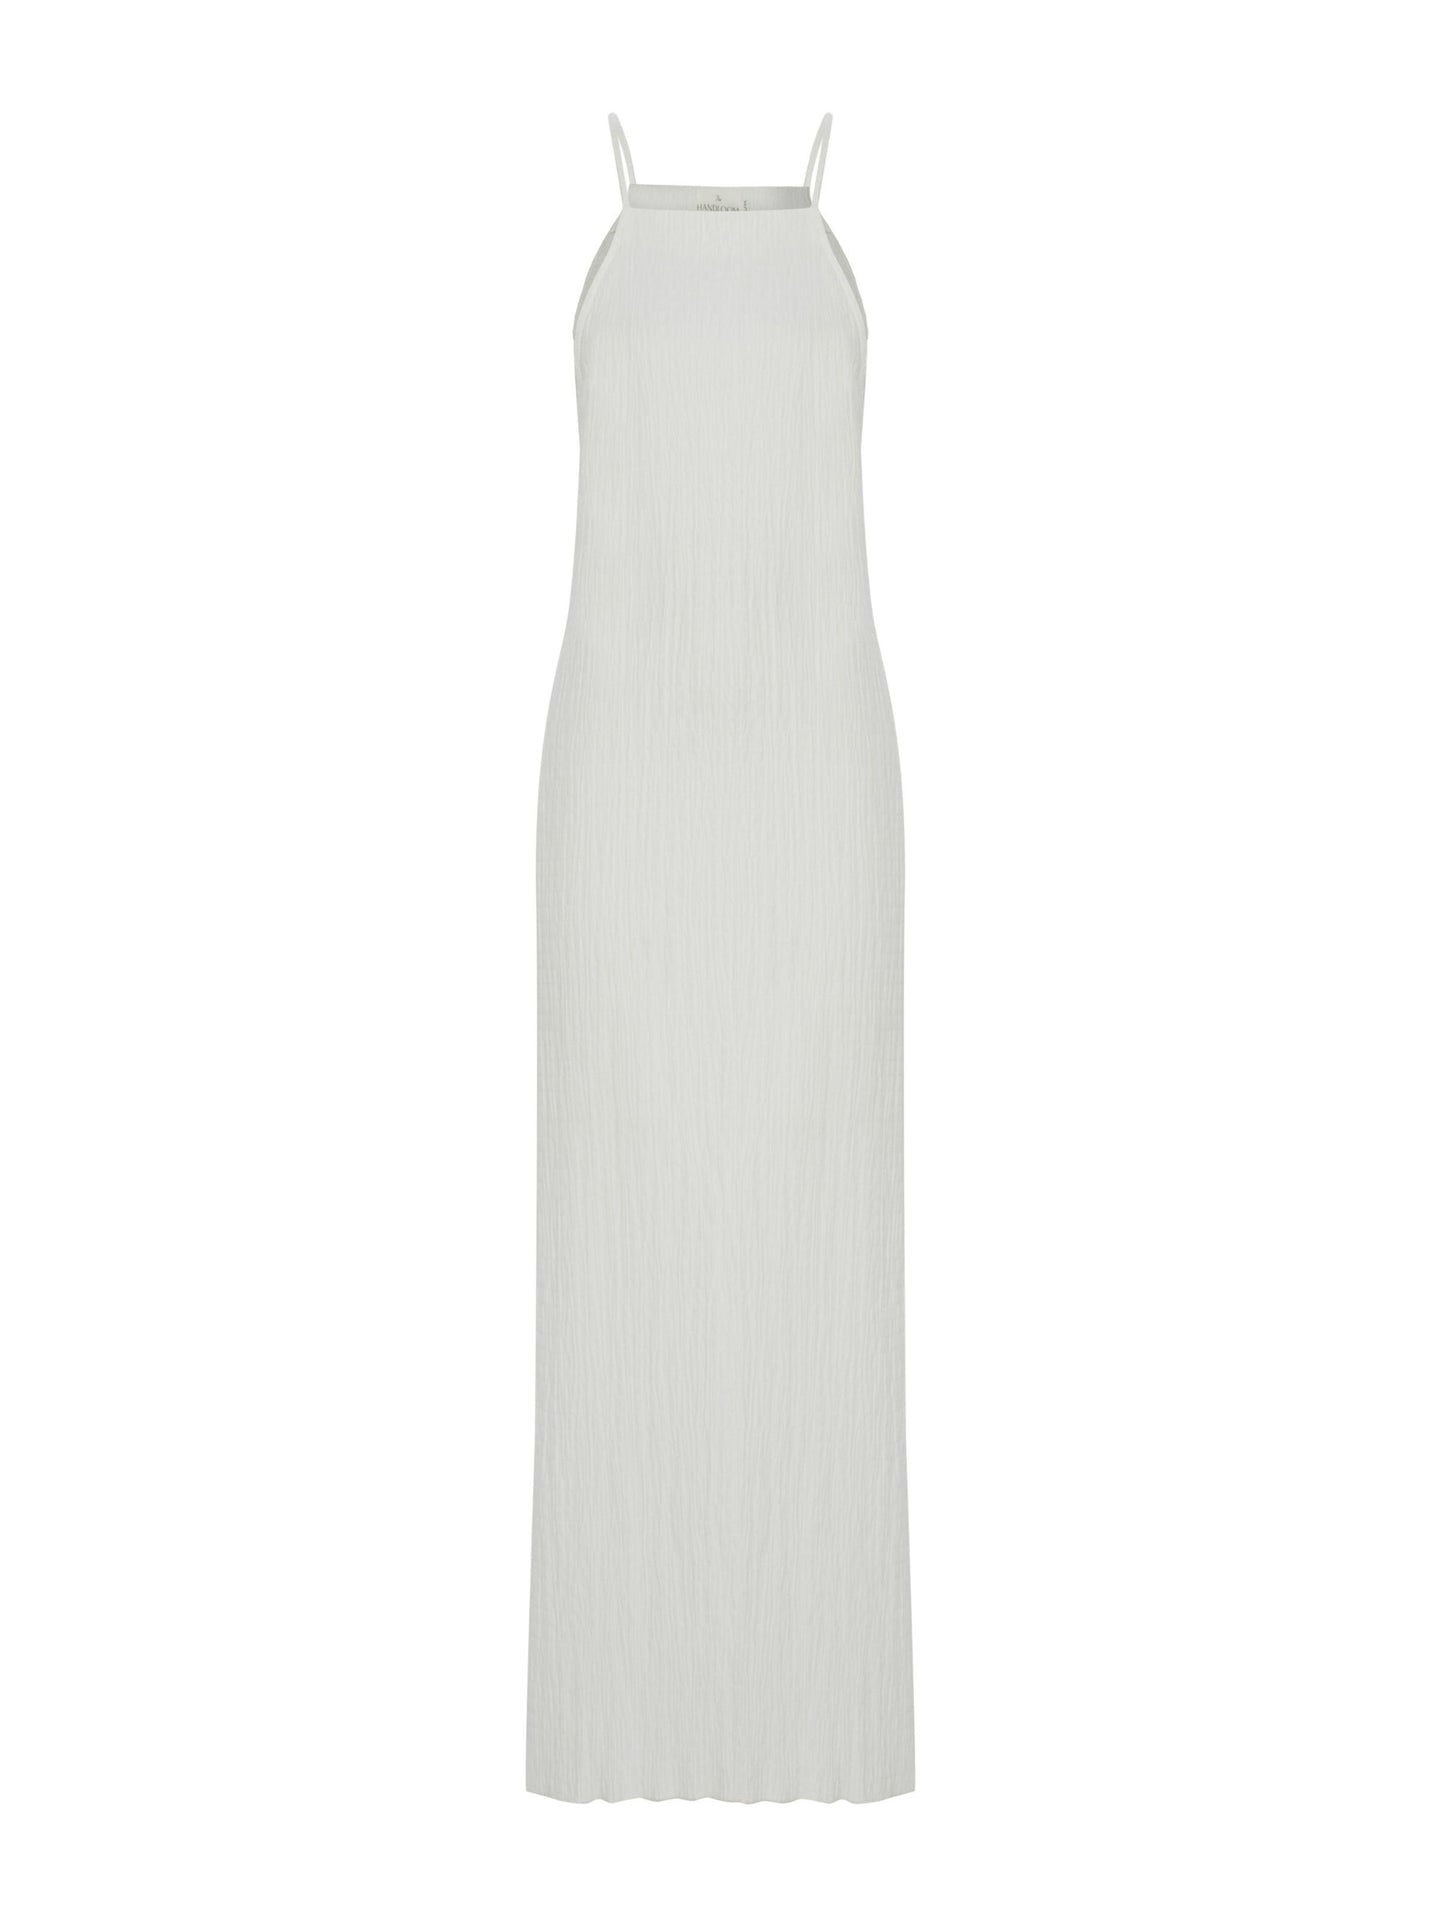 Siesta Dress - White by The Handloom